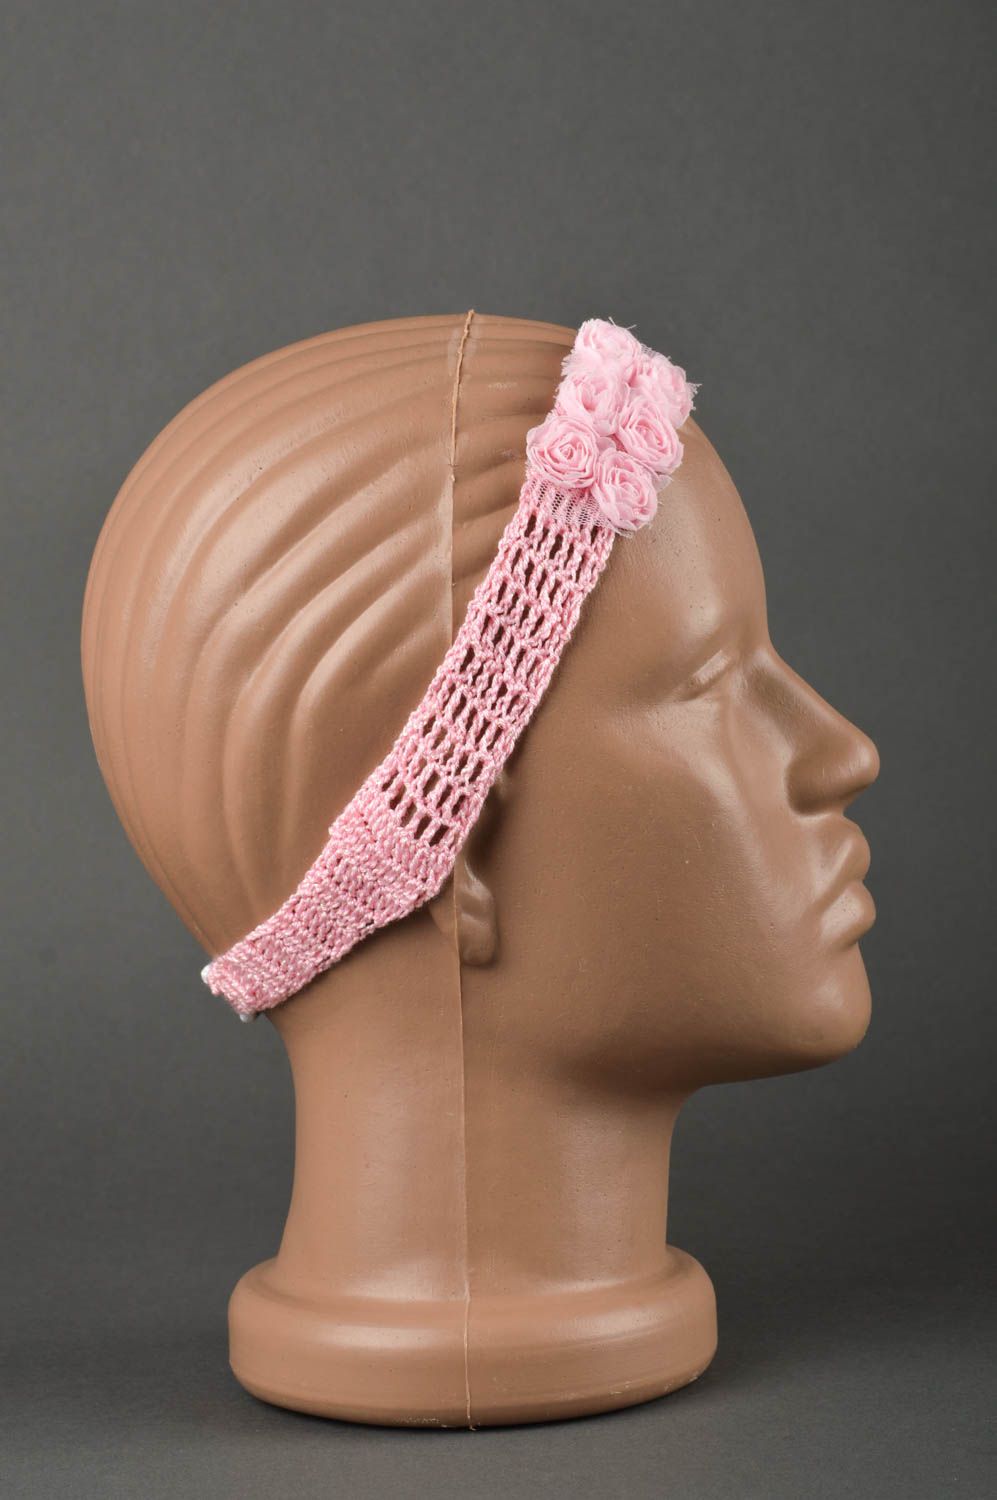 Stylish handmade crochet headband fashion head accessories crochet ideas photo 2